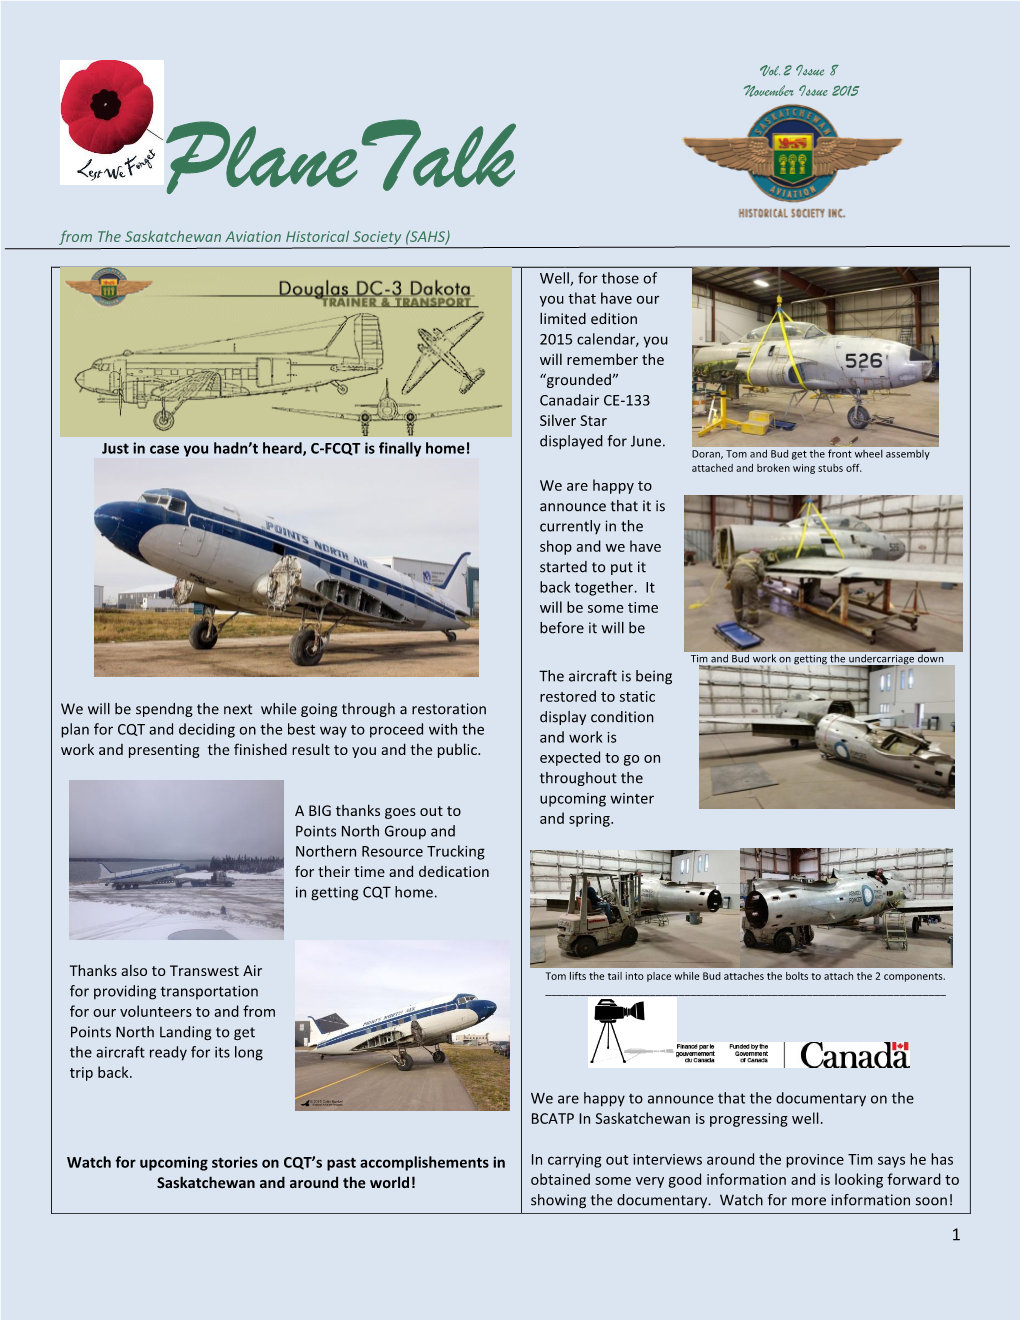 Planetalk from the Saskatchewan Aviation Historical Society (SAHS)